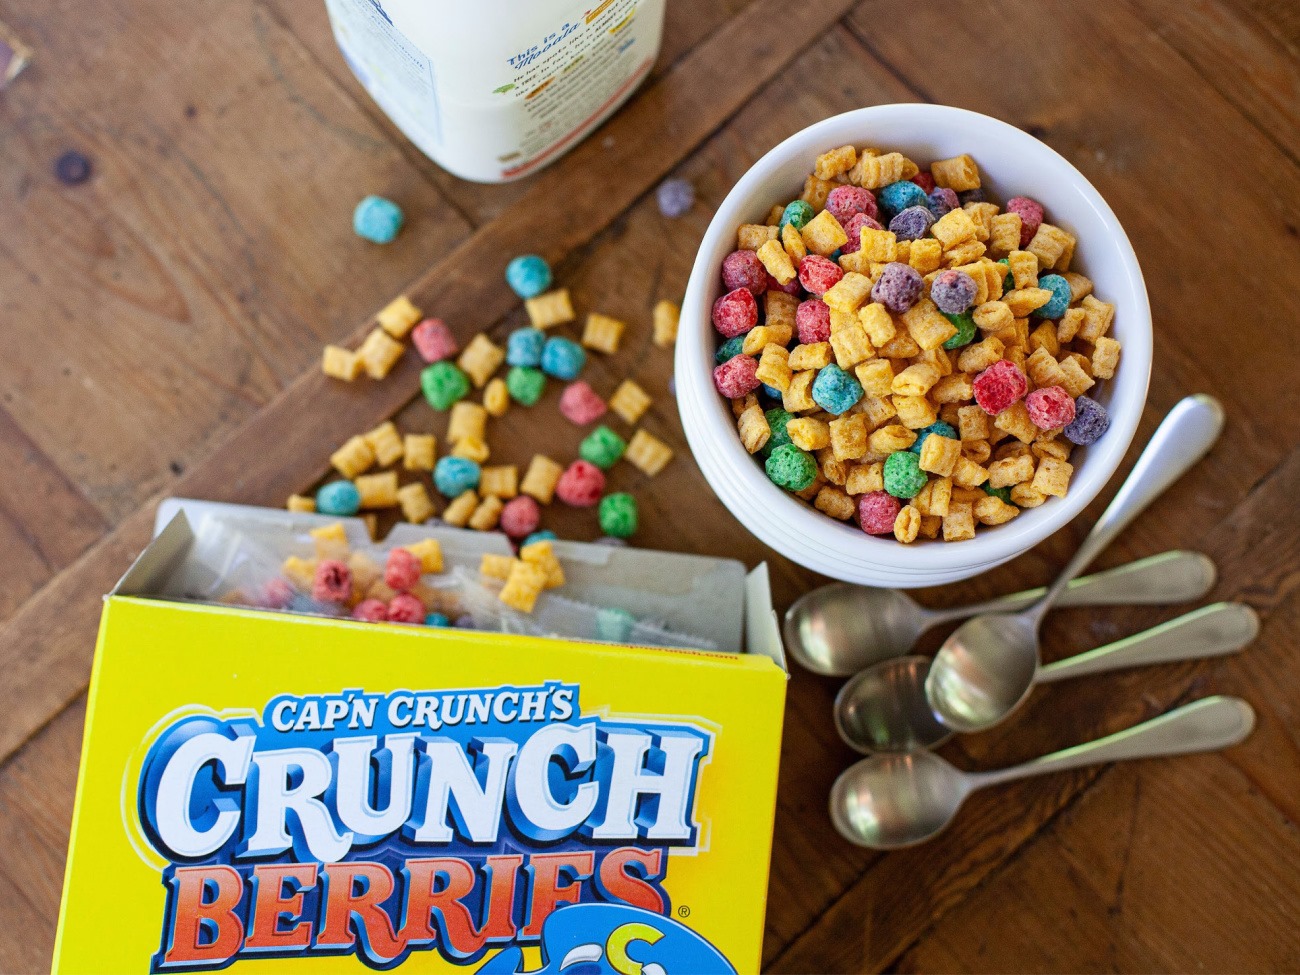 Save On Quaker Cap’n Crunch Cereal At Kroger Just $1.99 Per Box